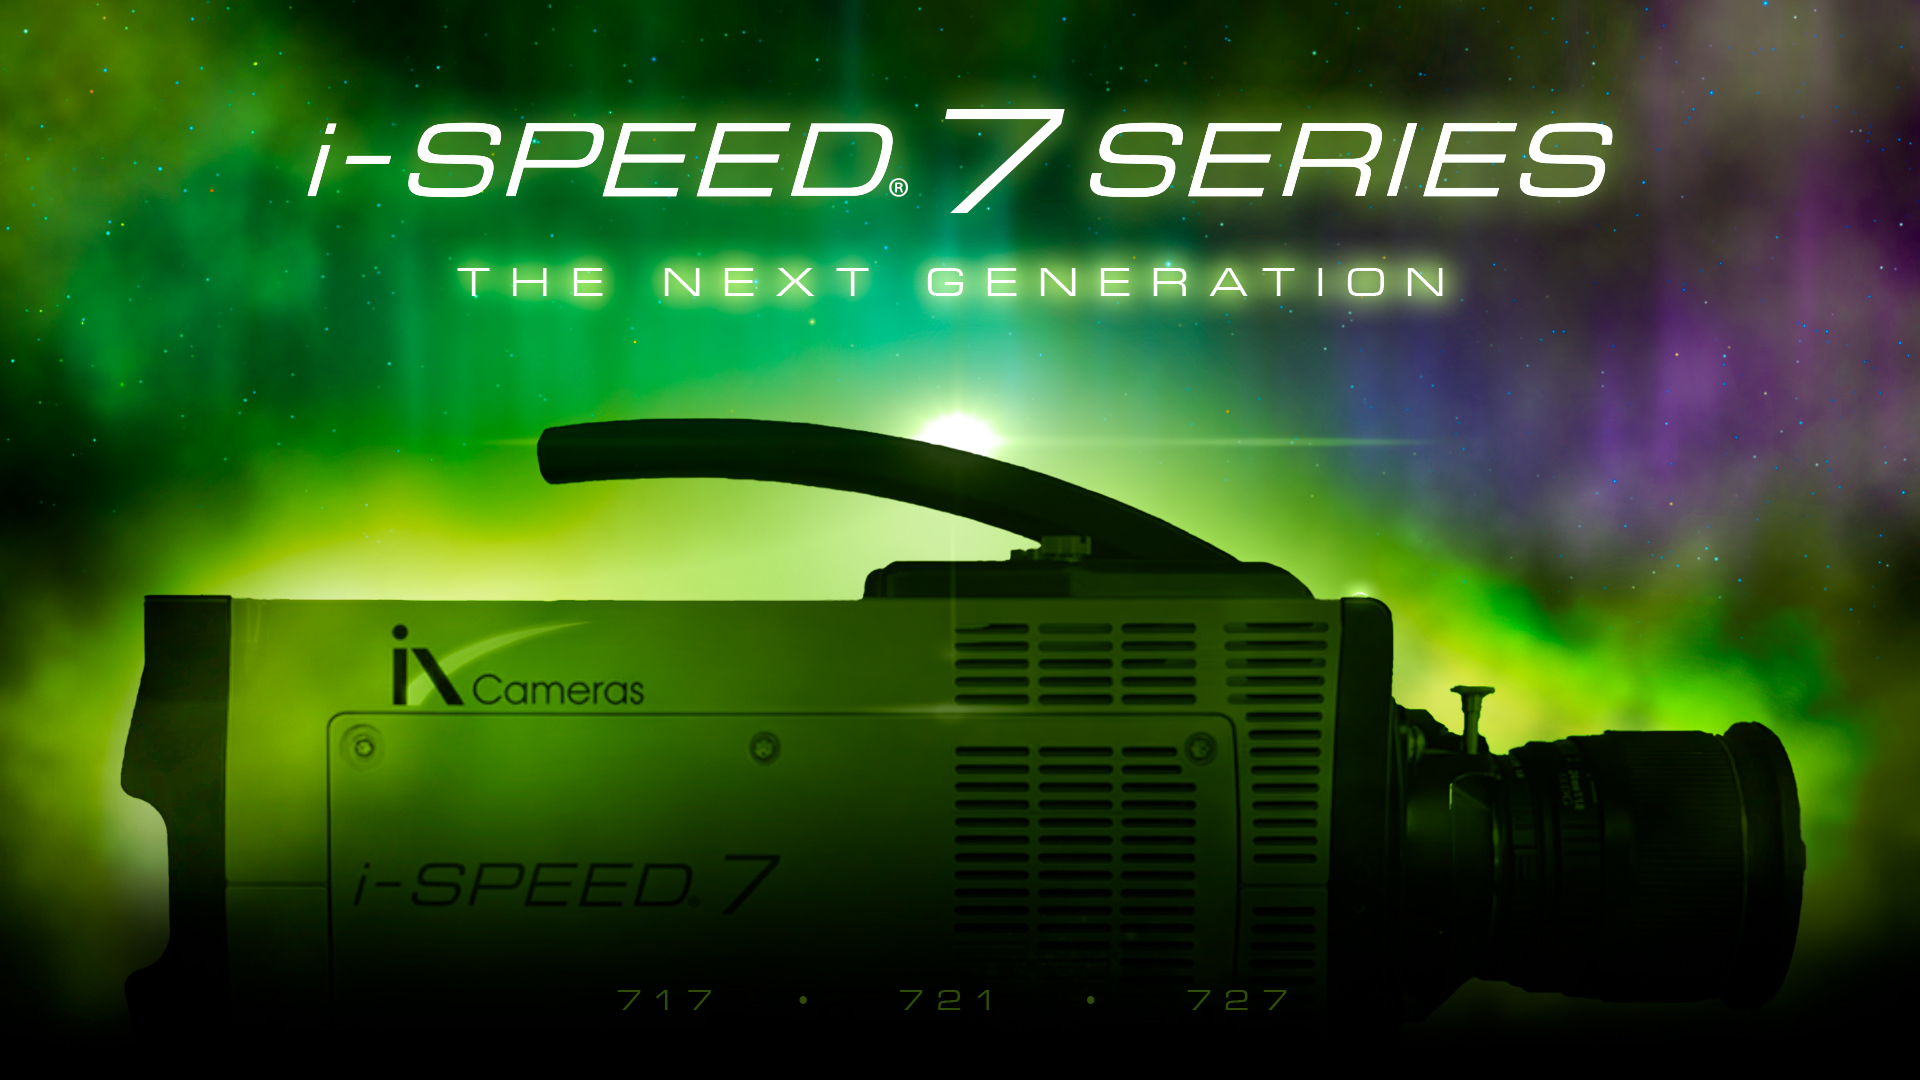 iX Cameras i-SPEED 7 Series, the next generation hero image.